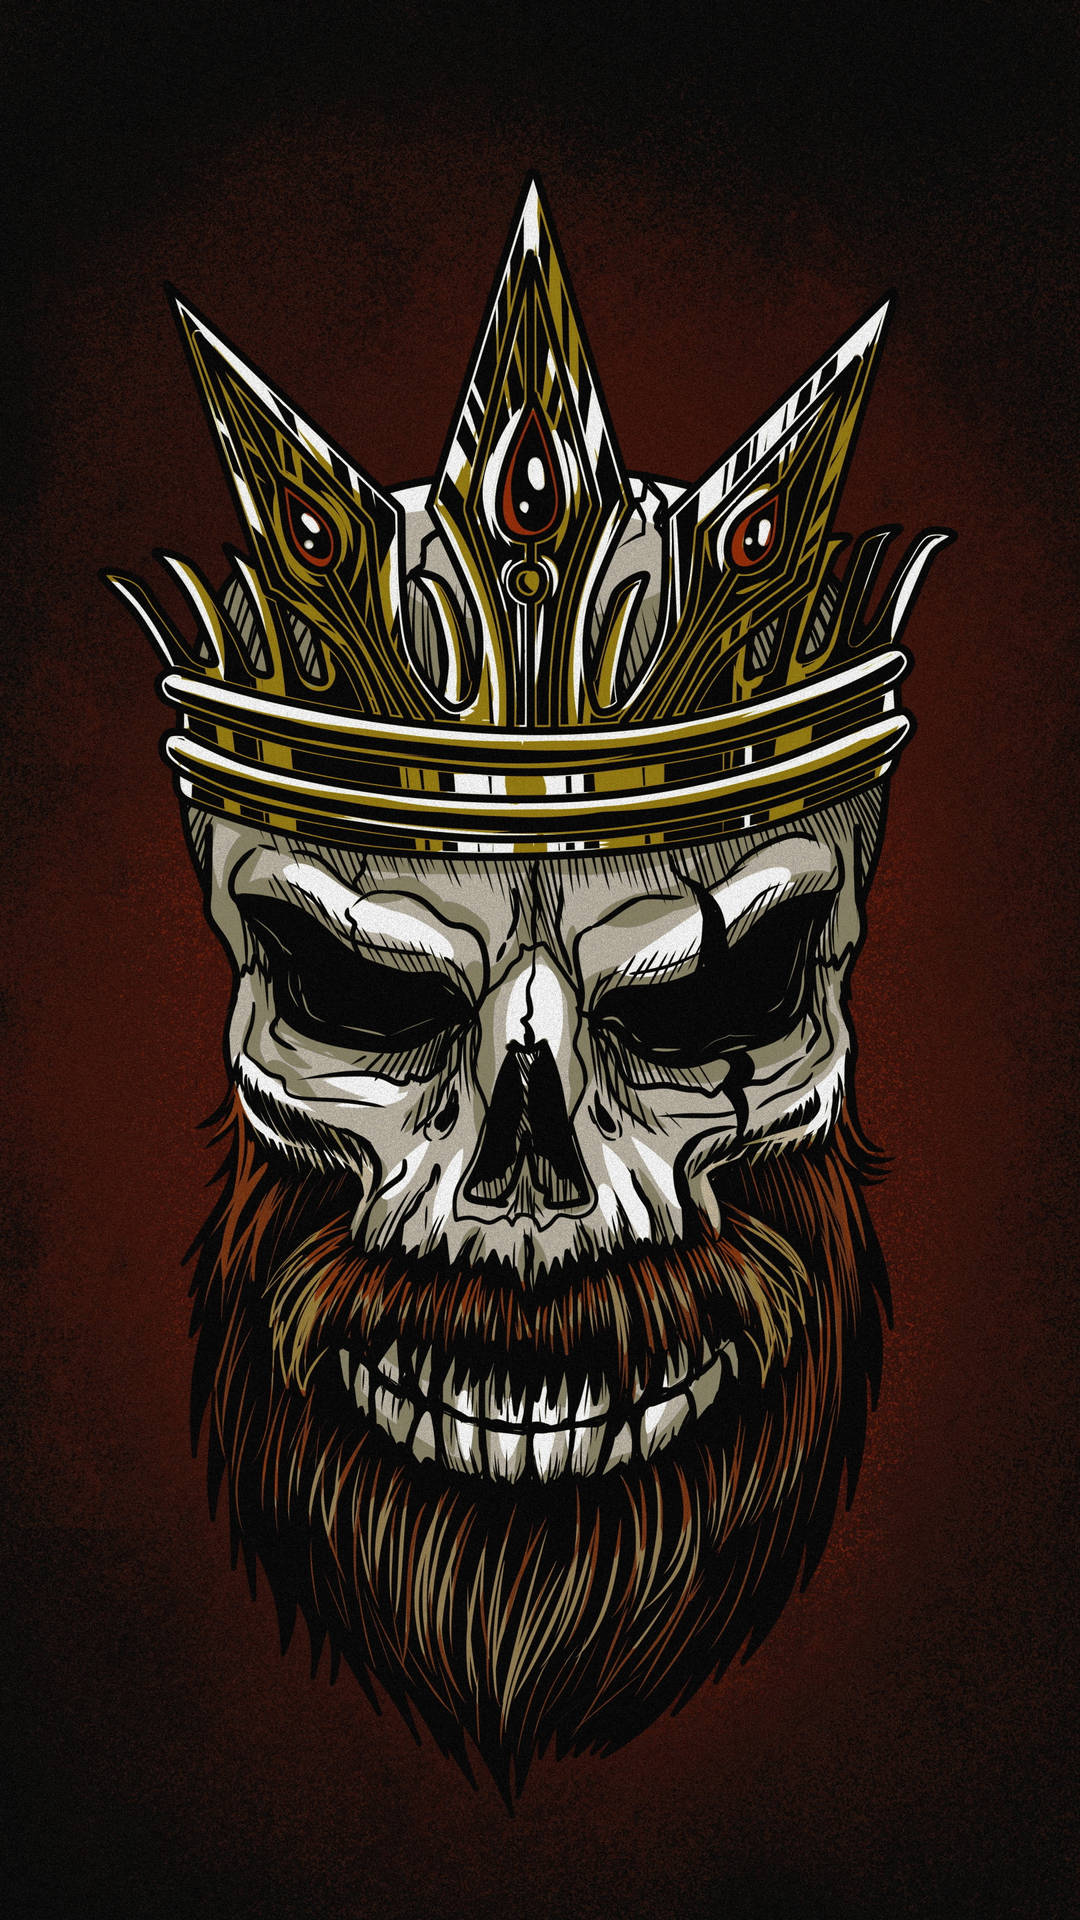 Beard Skull King Iphone Background